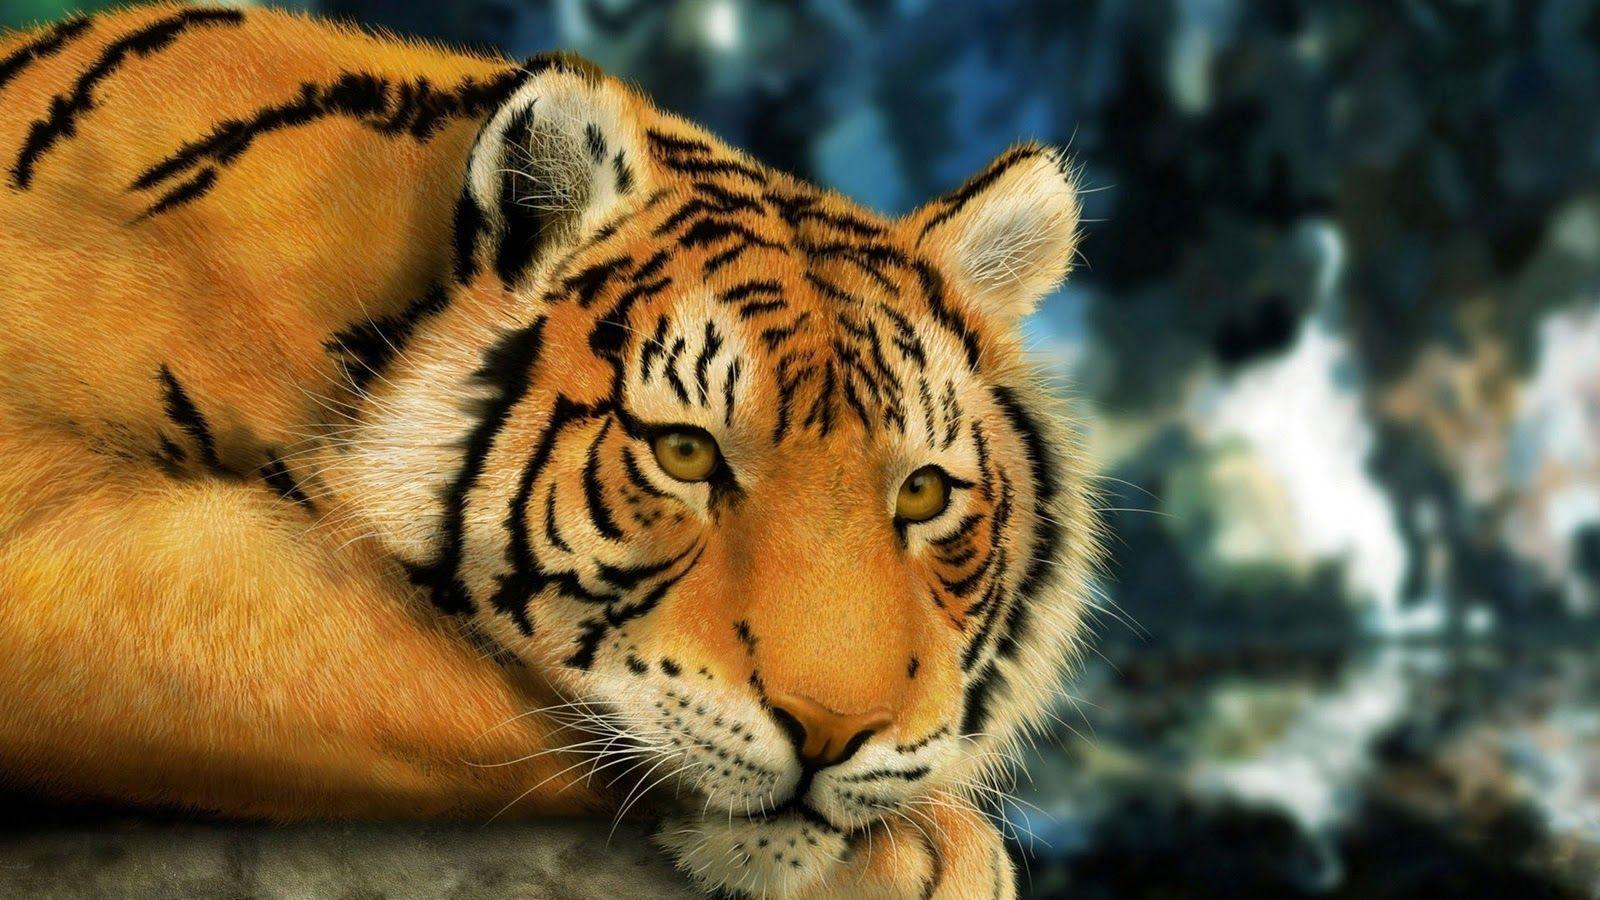 Tiger Cool Wallpaper HD Free Download Wallpaper 1600x900PX